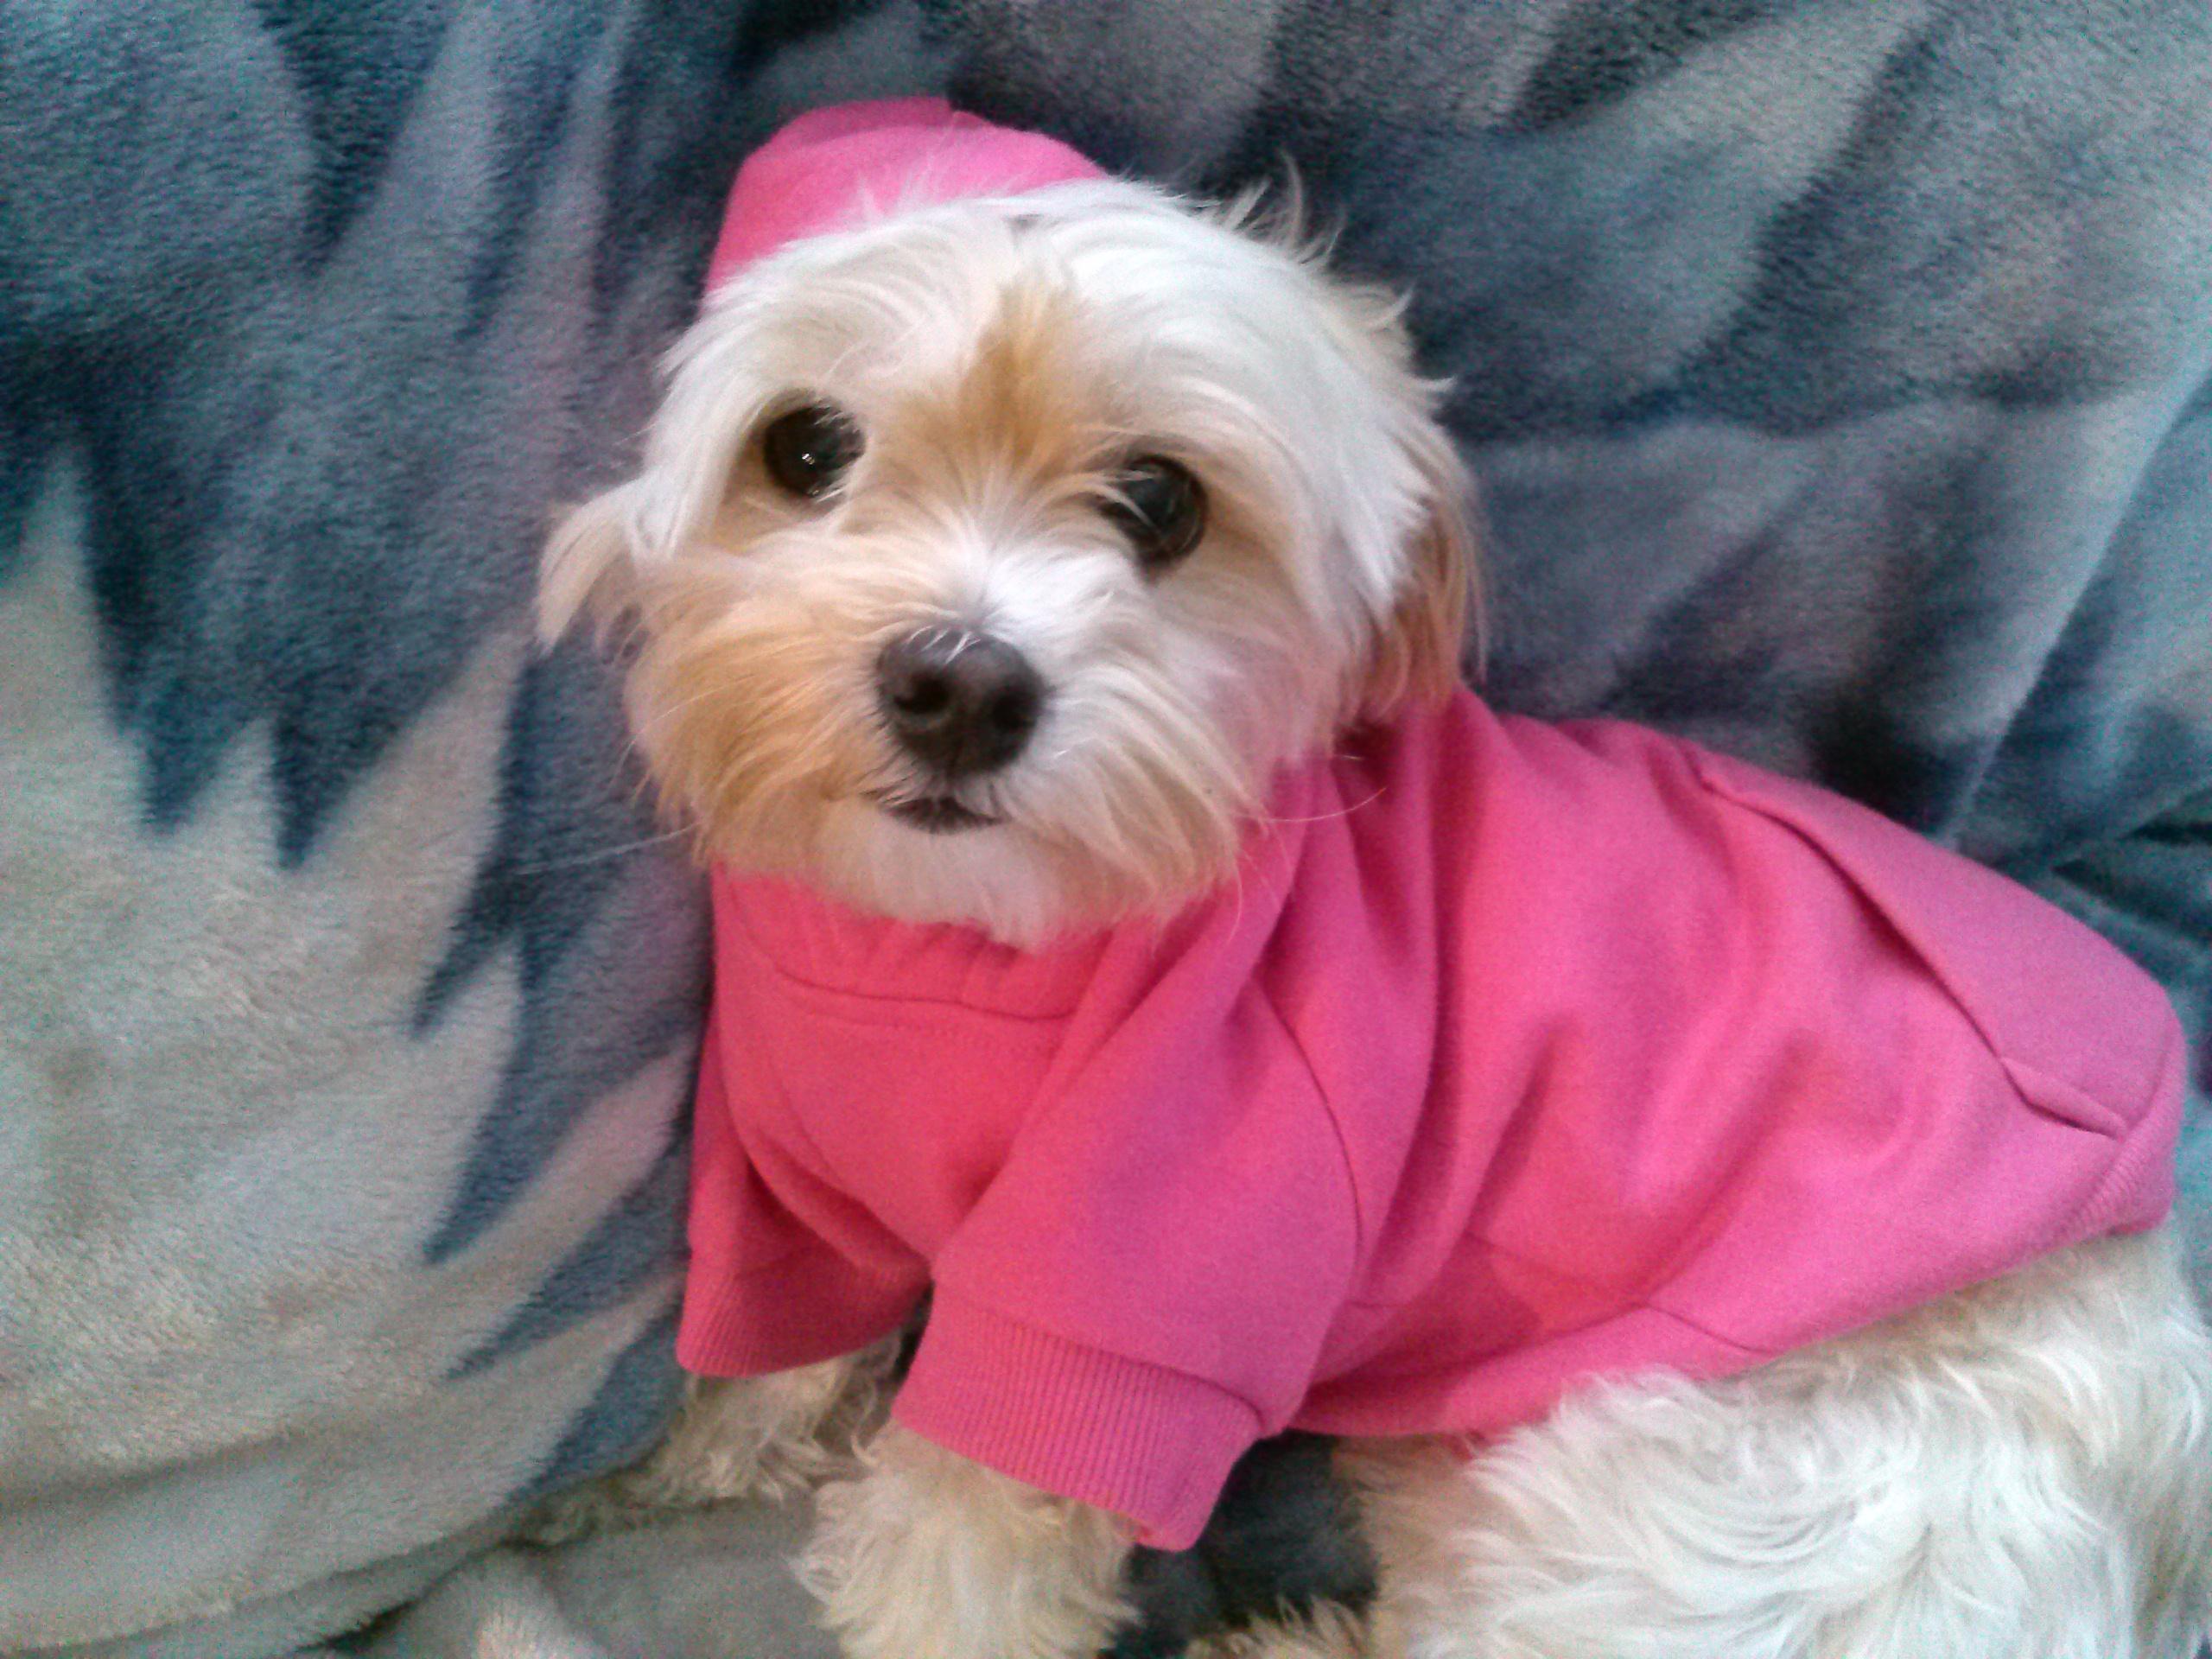 This adorable Morkie is wearing her pink hoodie!